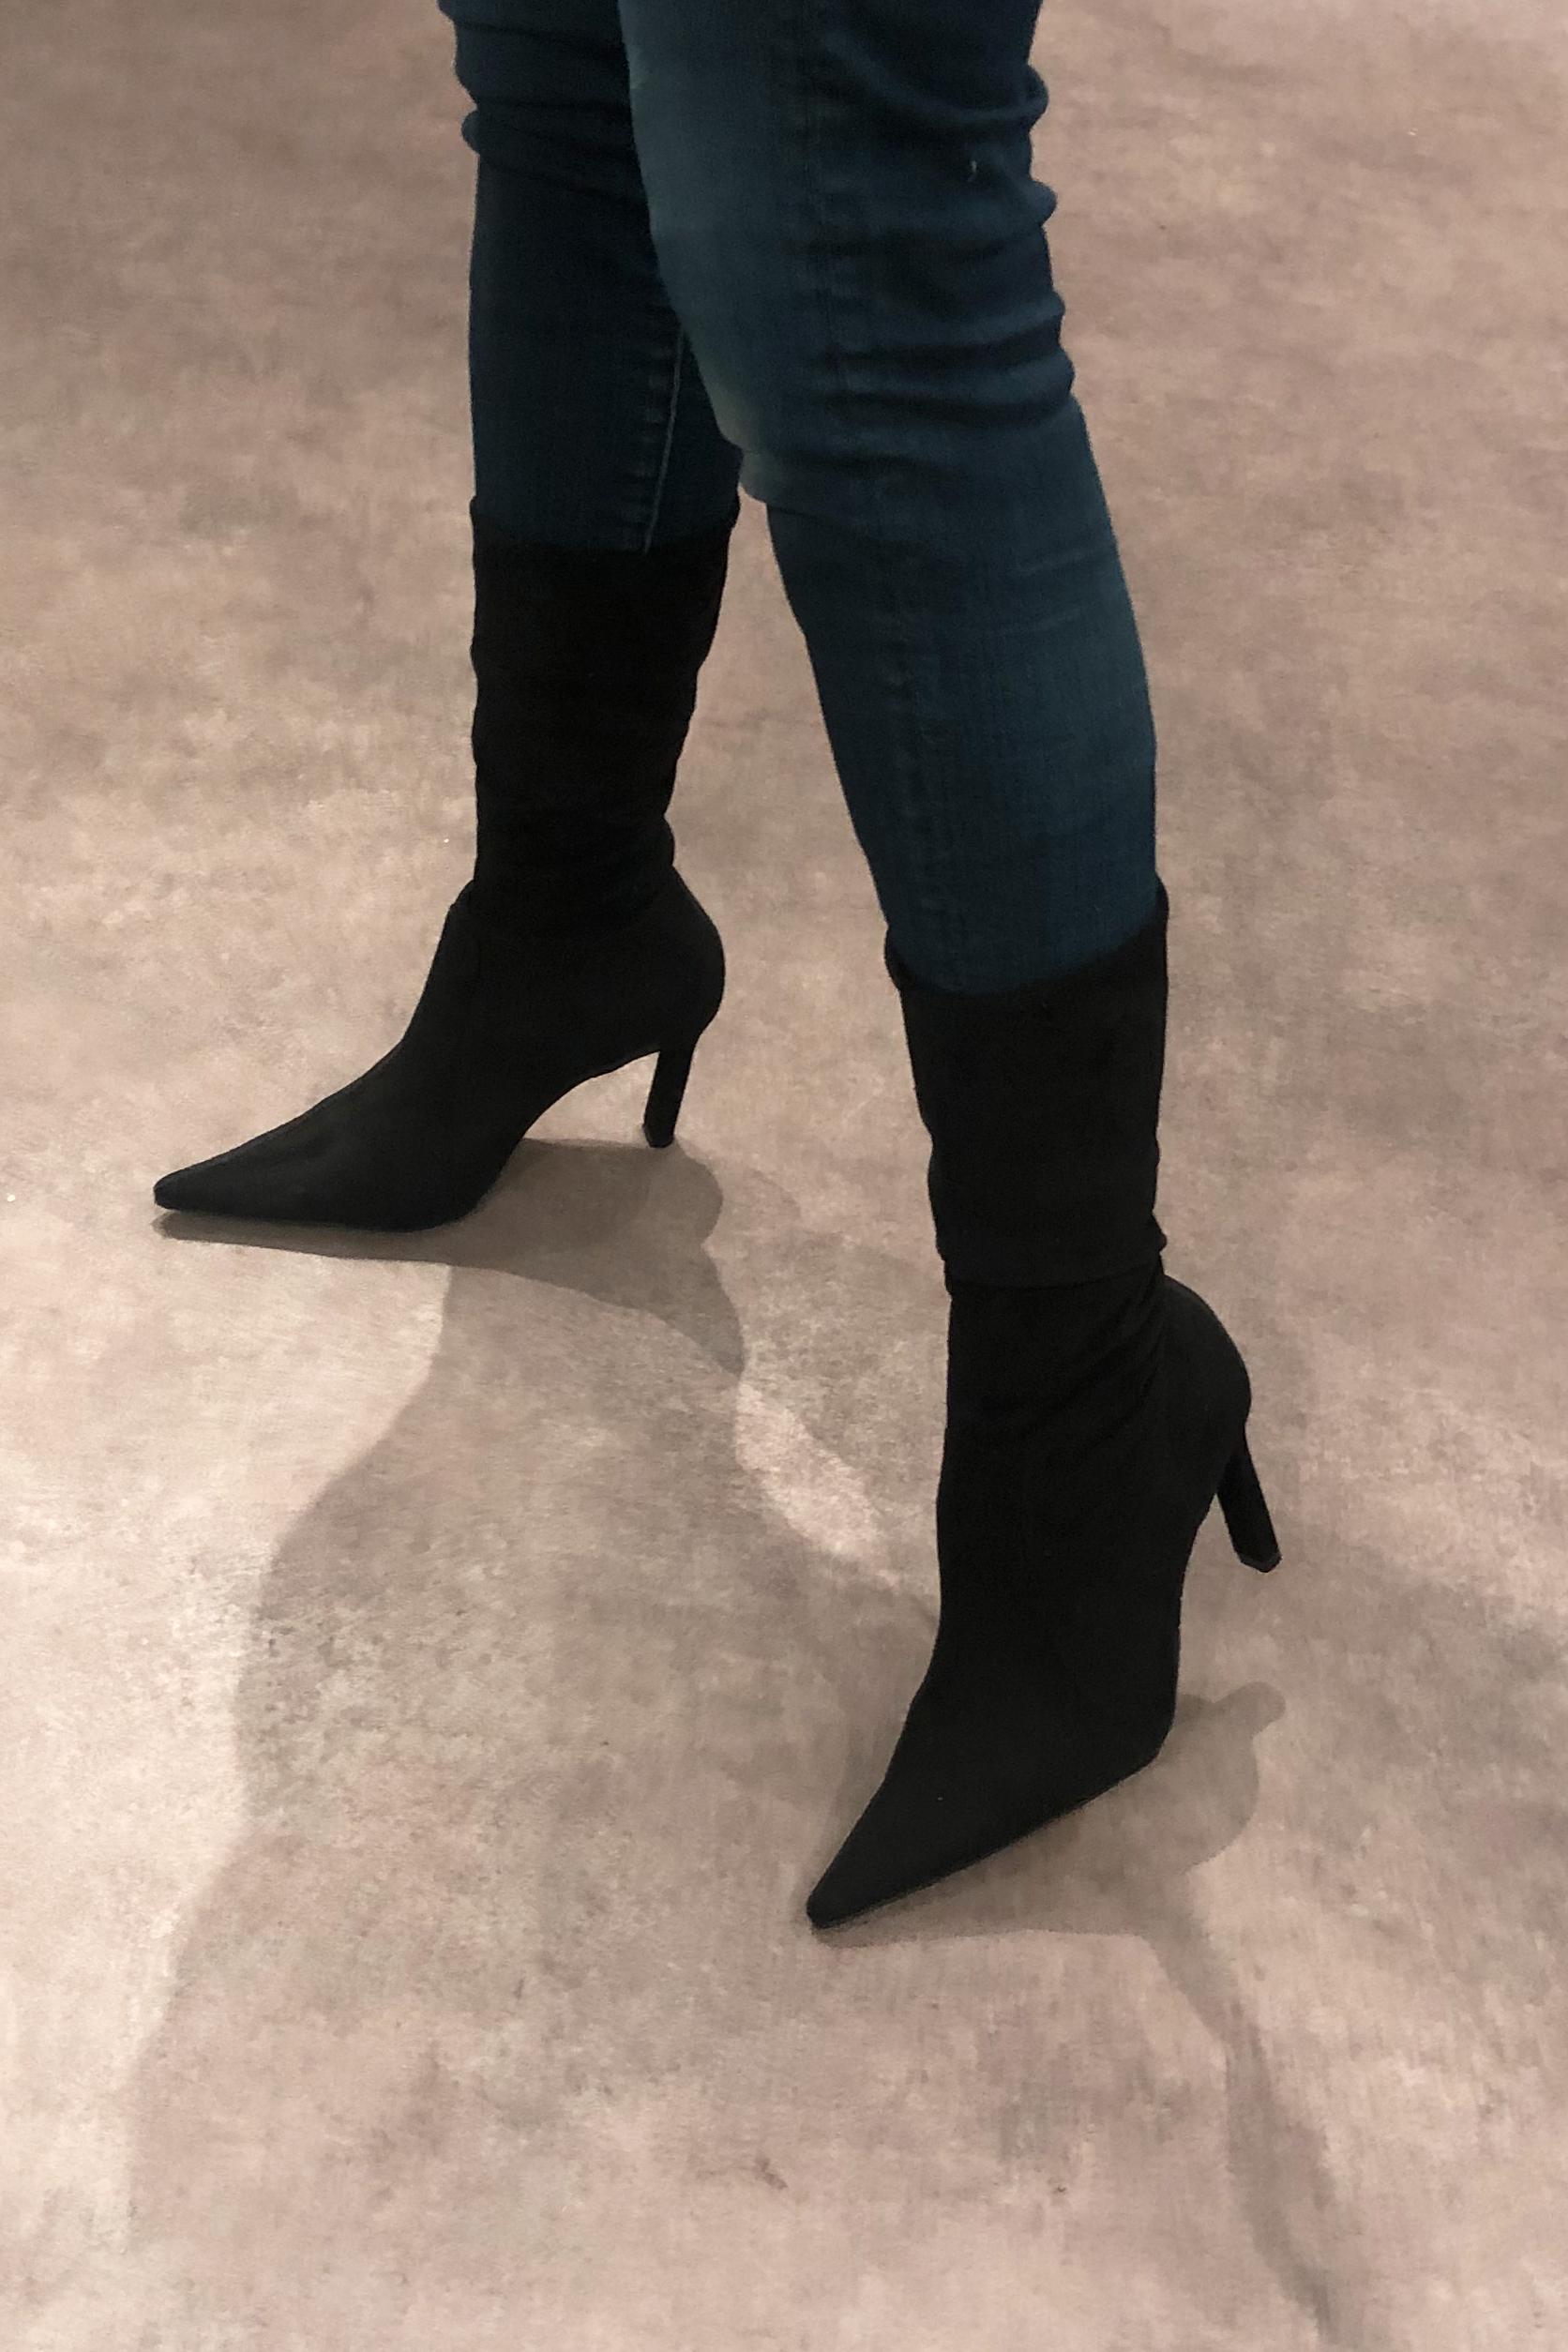 Matt black women's mid-calf boots. Pointed toe. Very high slim heel. Made to measure. Worn view - Florence KOOIJMAN